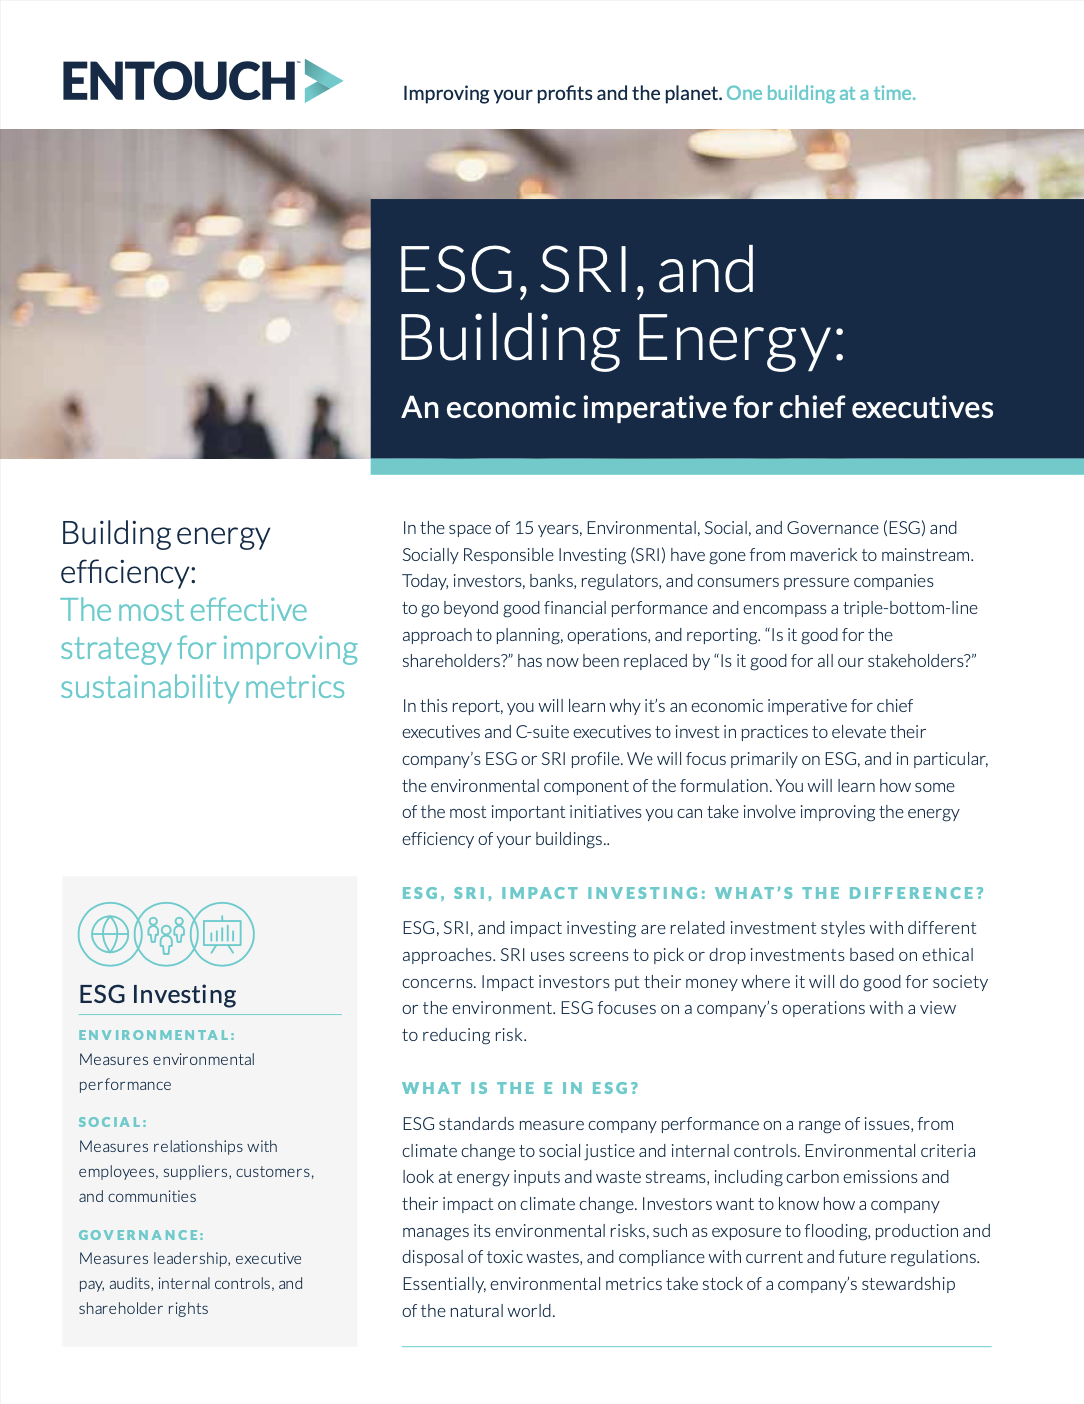 ESG,SRI, and Building Energy PDF